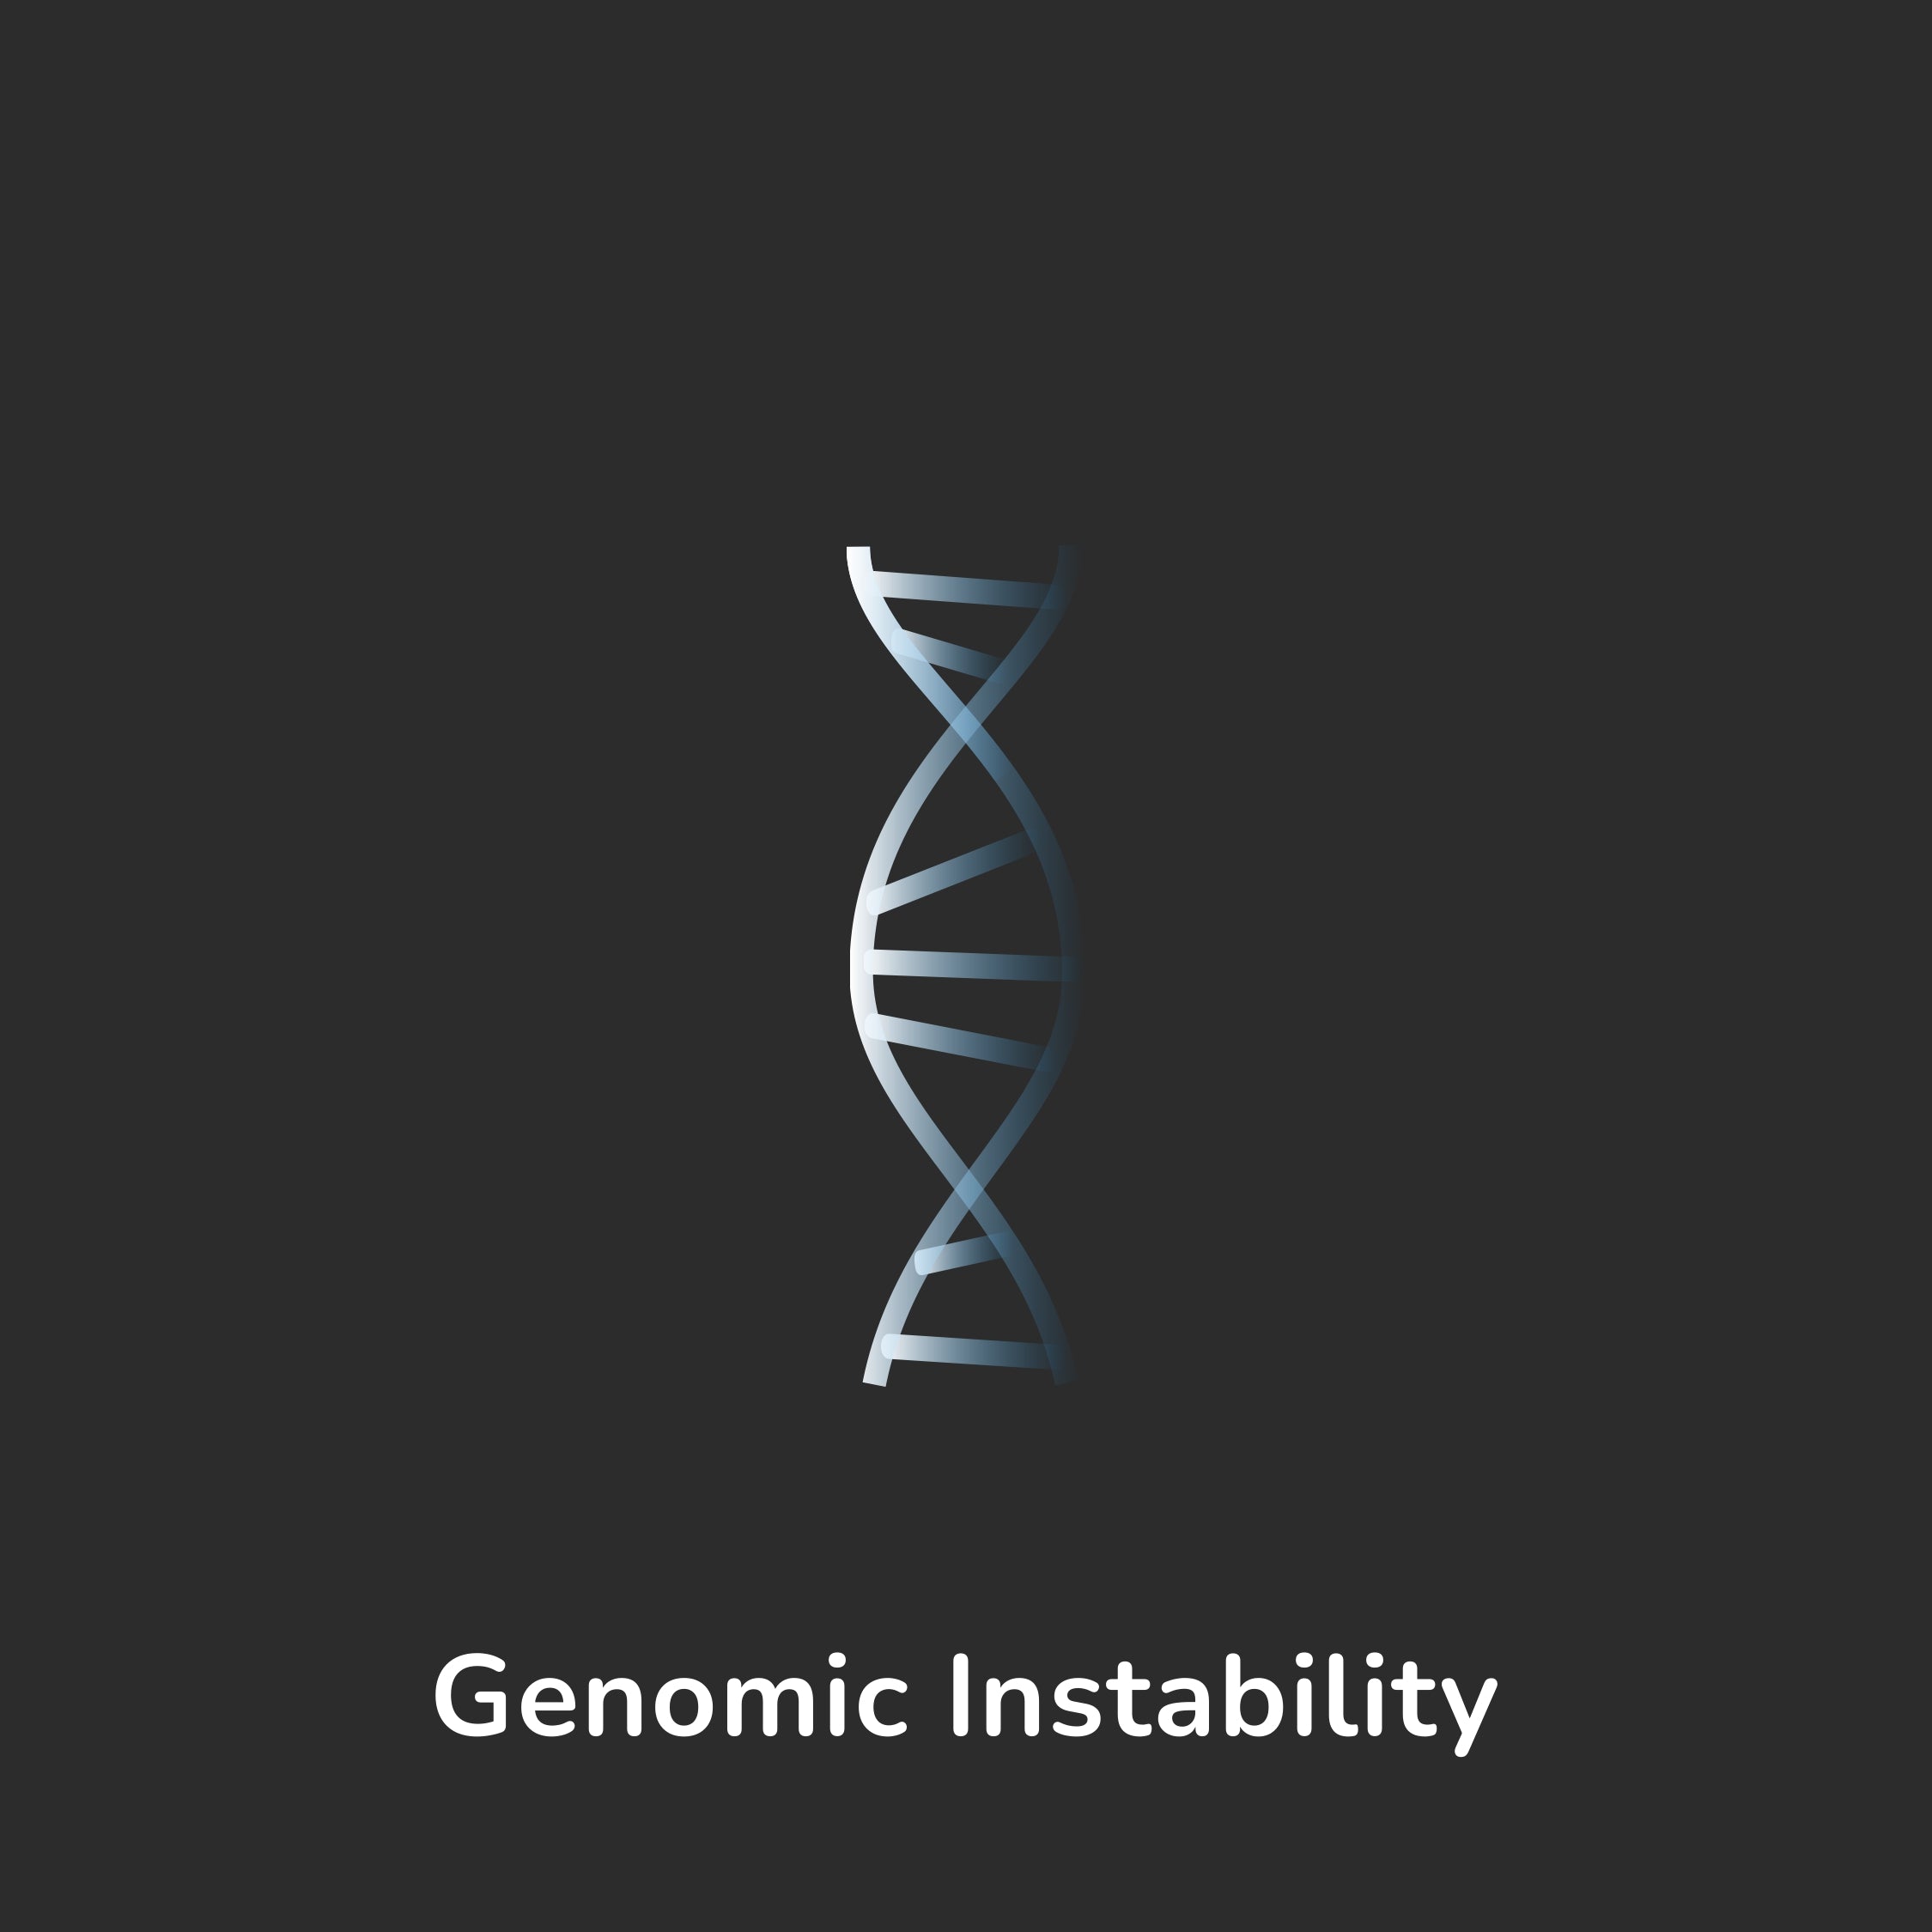 Aging Hallmark - Genomic Instability